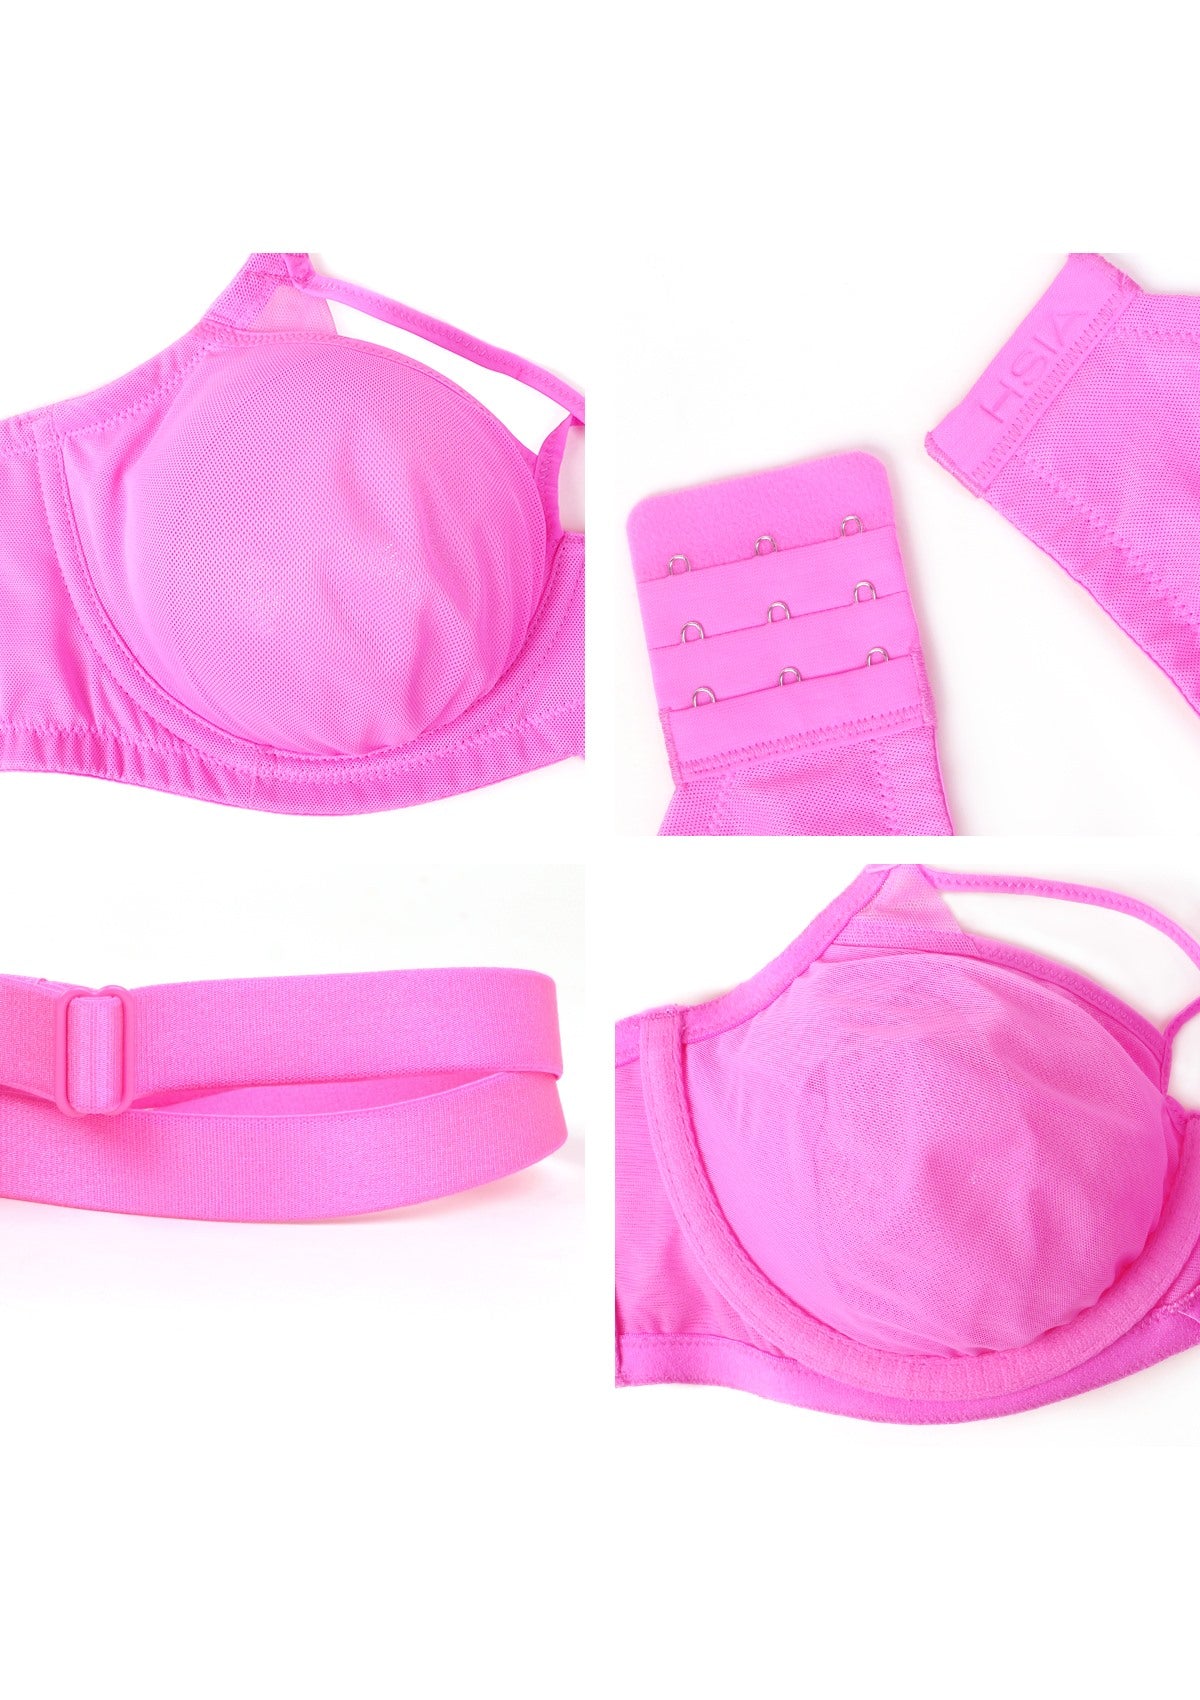 HSIA Billie Cross Front Strap Smooth Sheer Mesh Comfy Underwire Bra - Barbie Pink / 36 / DDD/F